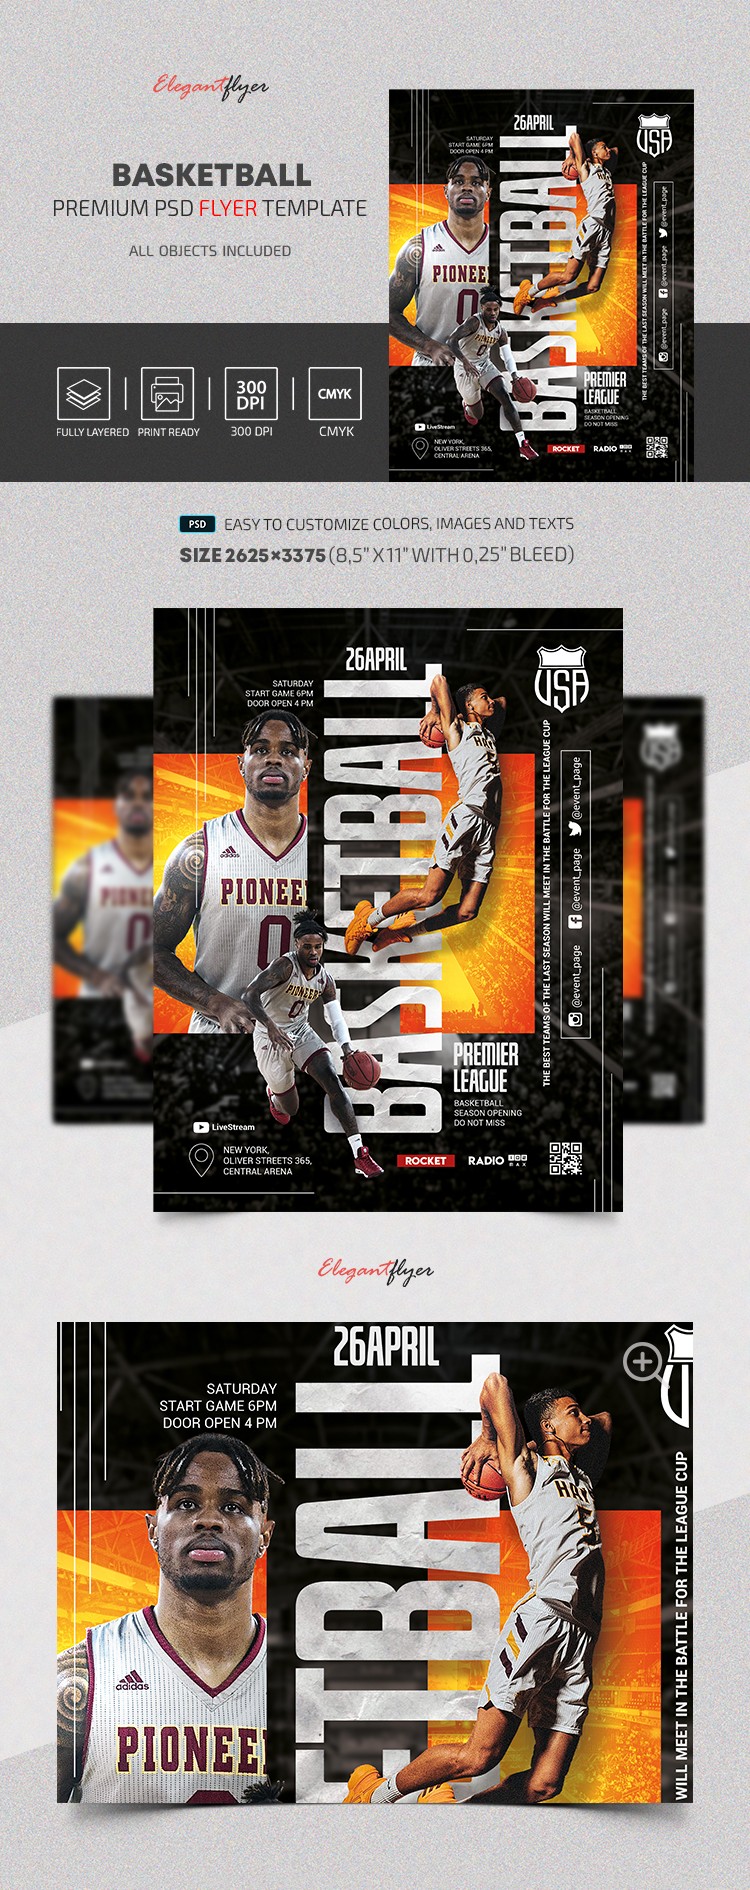 Basketball - Premium PSD Flyer Template by ElegantFlyer